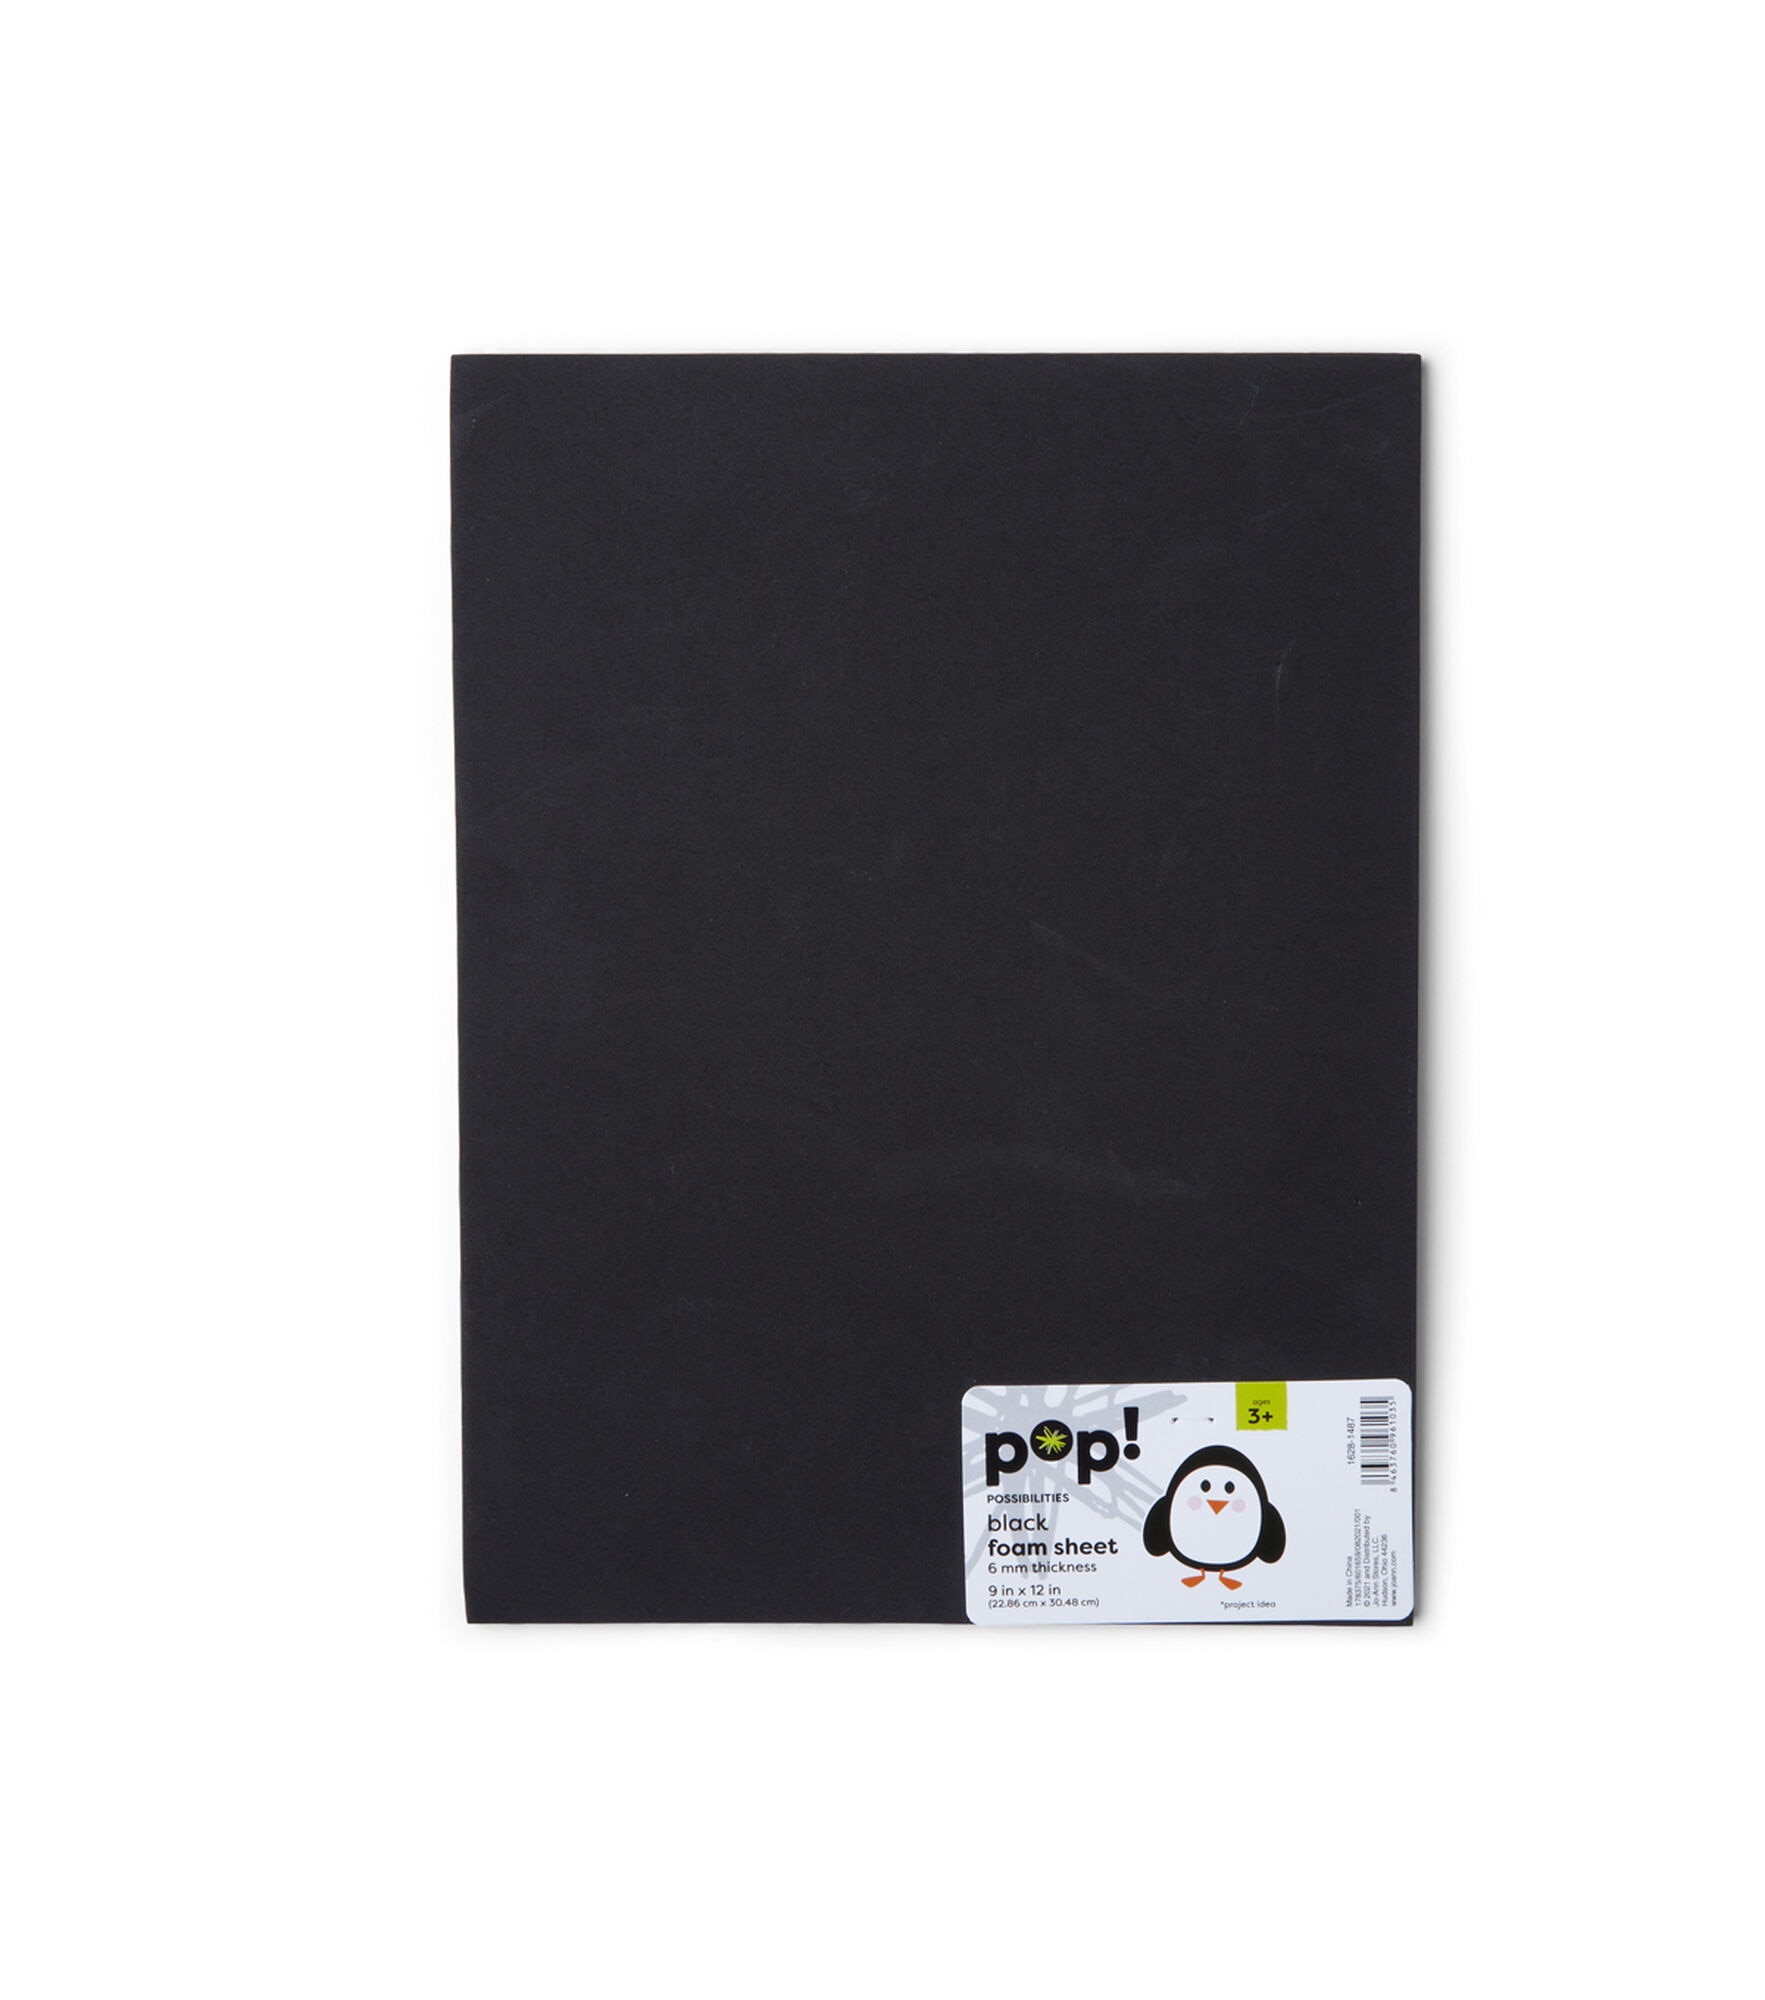 24 Packs: 18 ct. (432 total) 9 x 12 Black Felt Sheets by